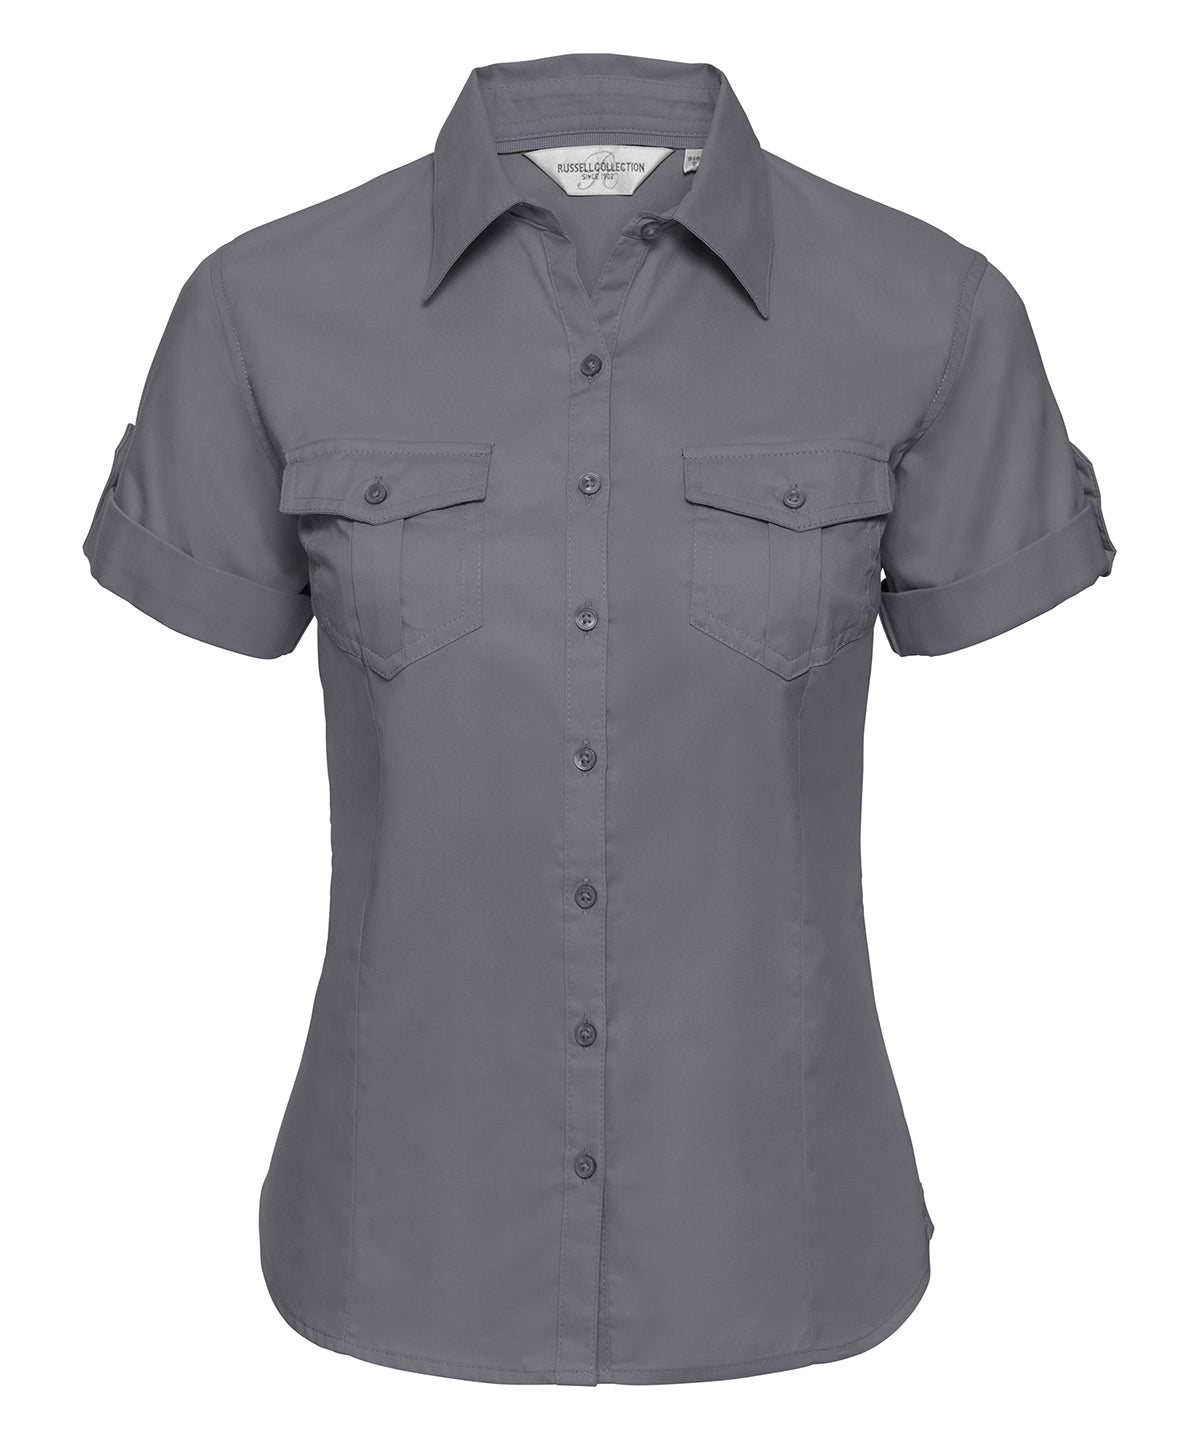 Bolir - Women's Roll-sleeve Short Sleeve Shirt